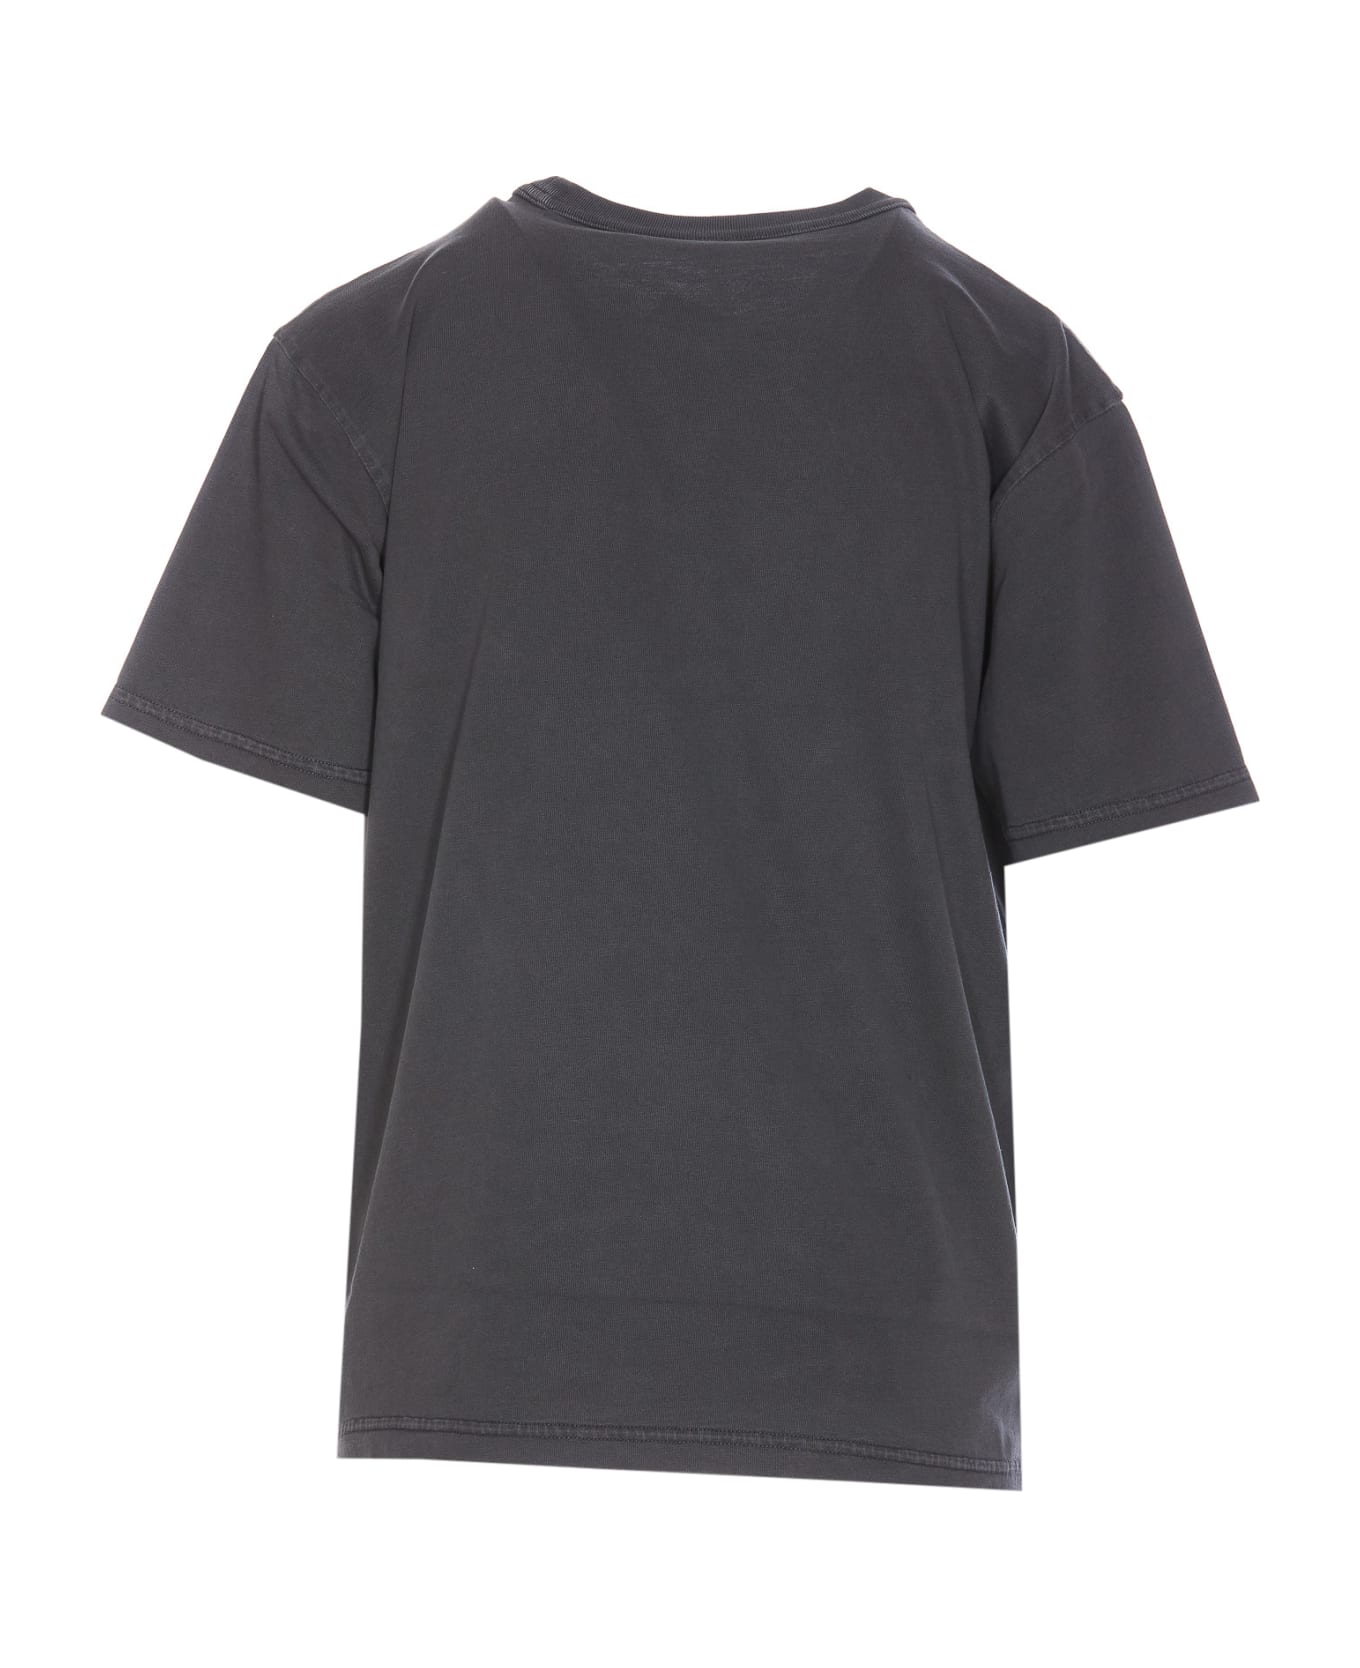 Alexander Wang Logo Print T-shirt - A Soft Obsidian Tシャツ